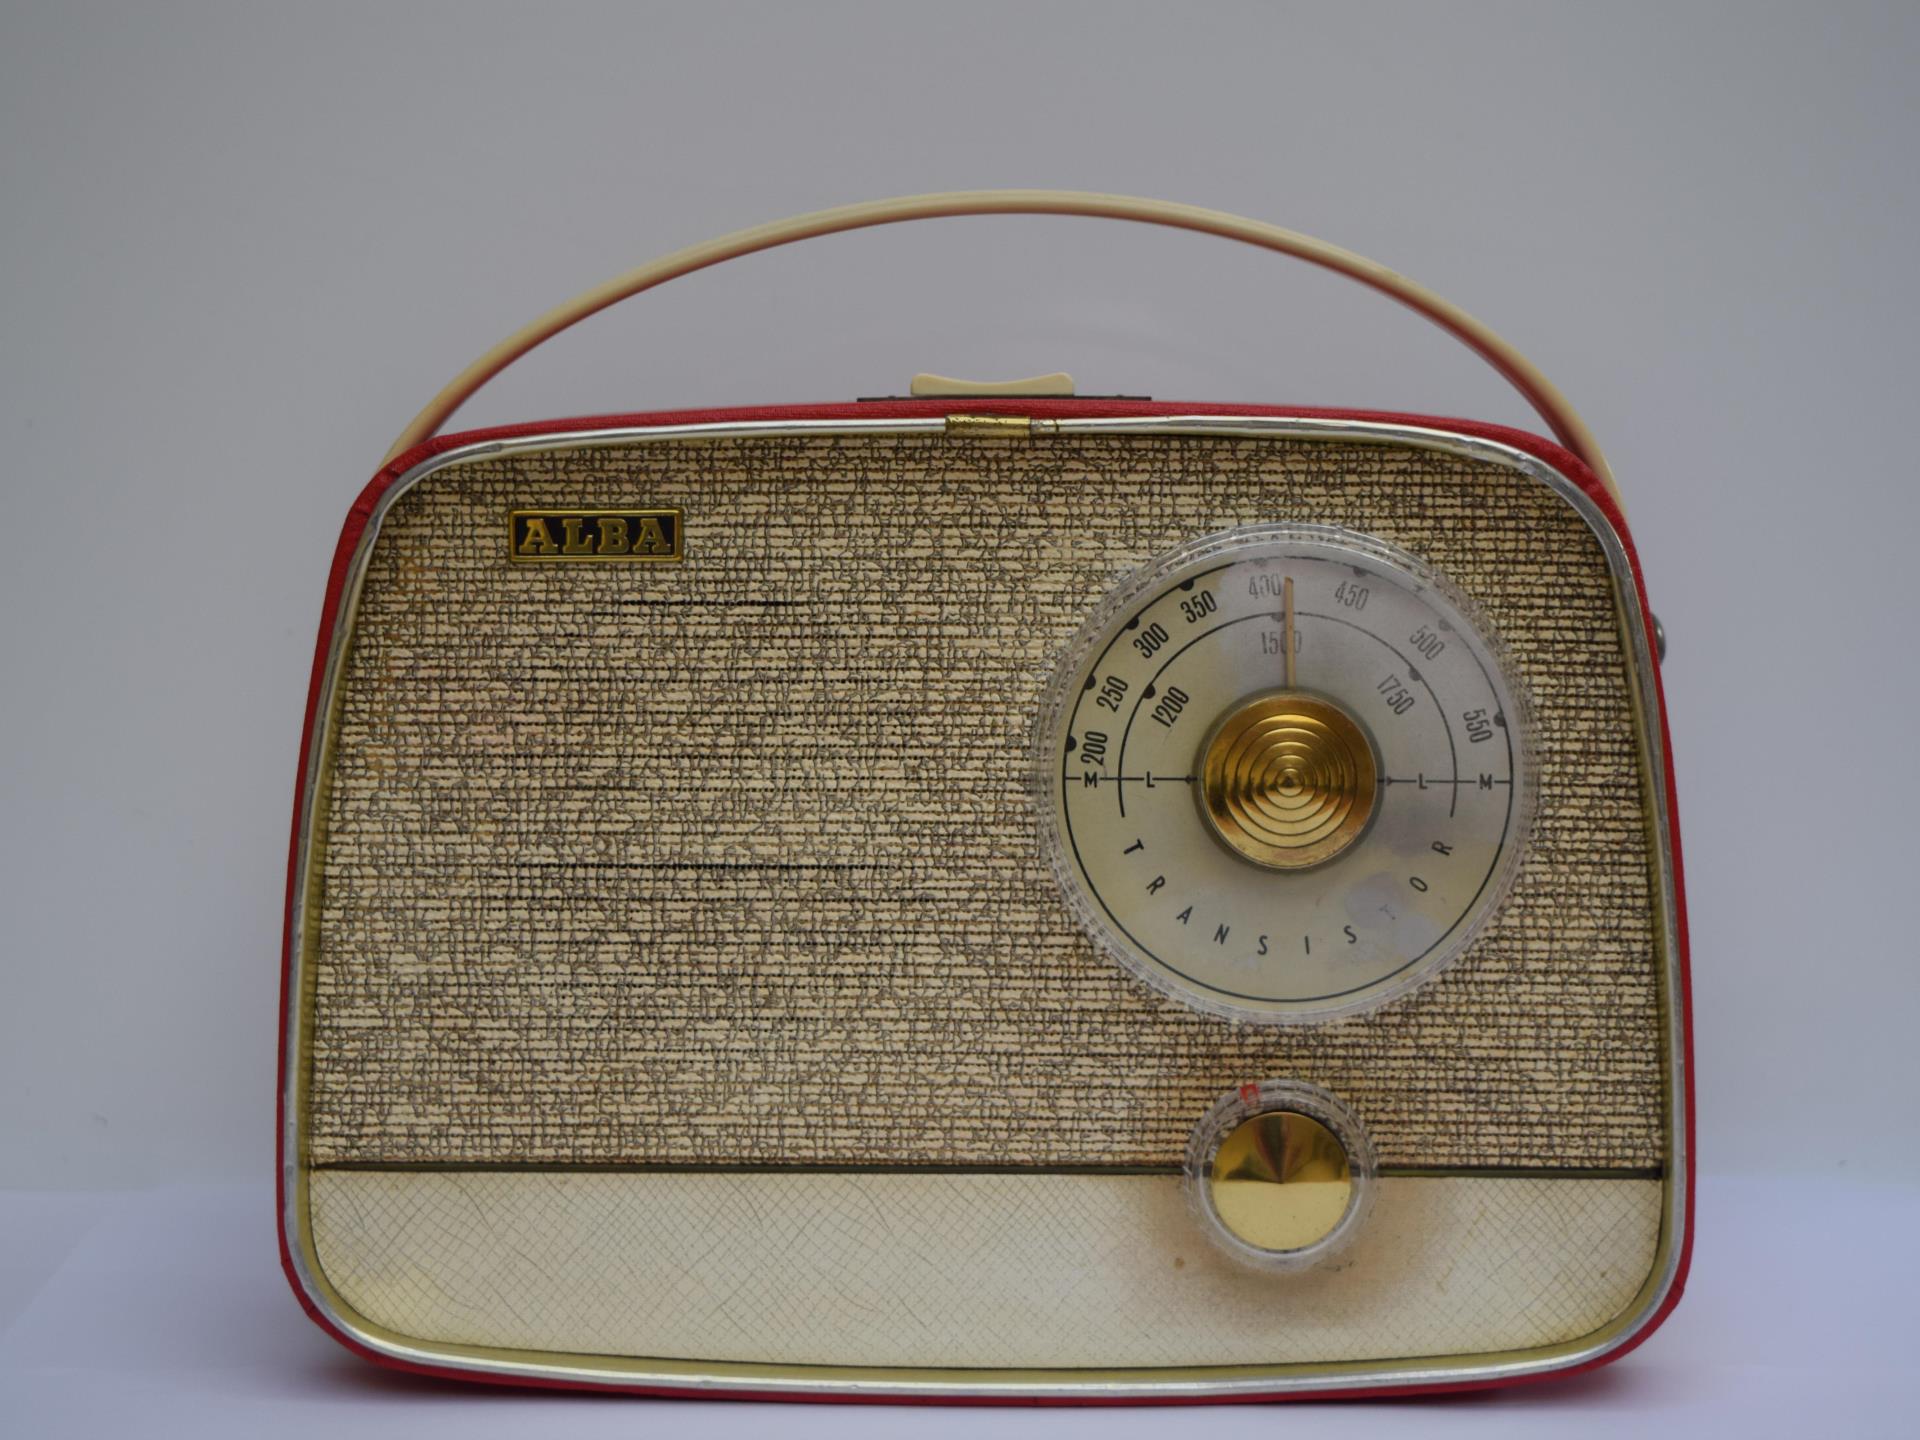 Alba 22 portable radio c1958